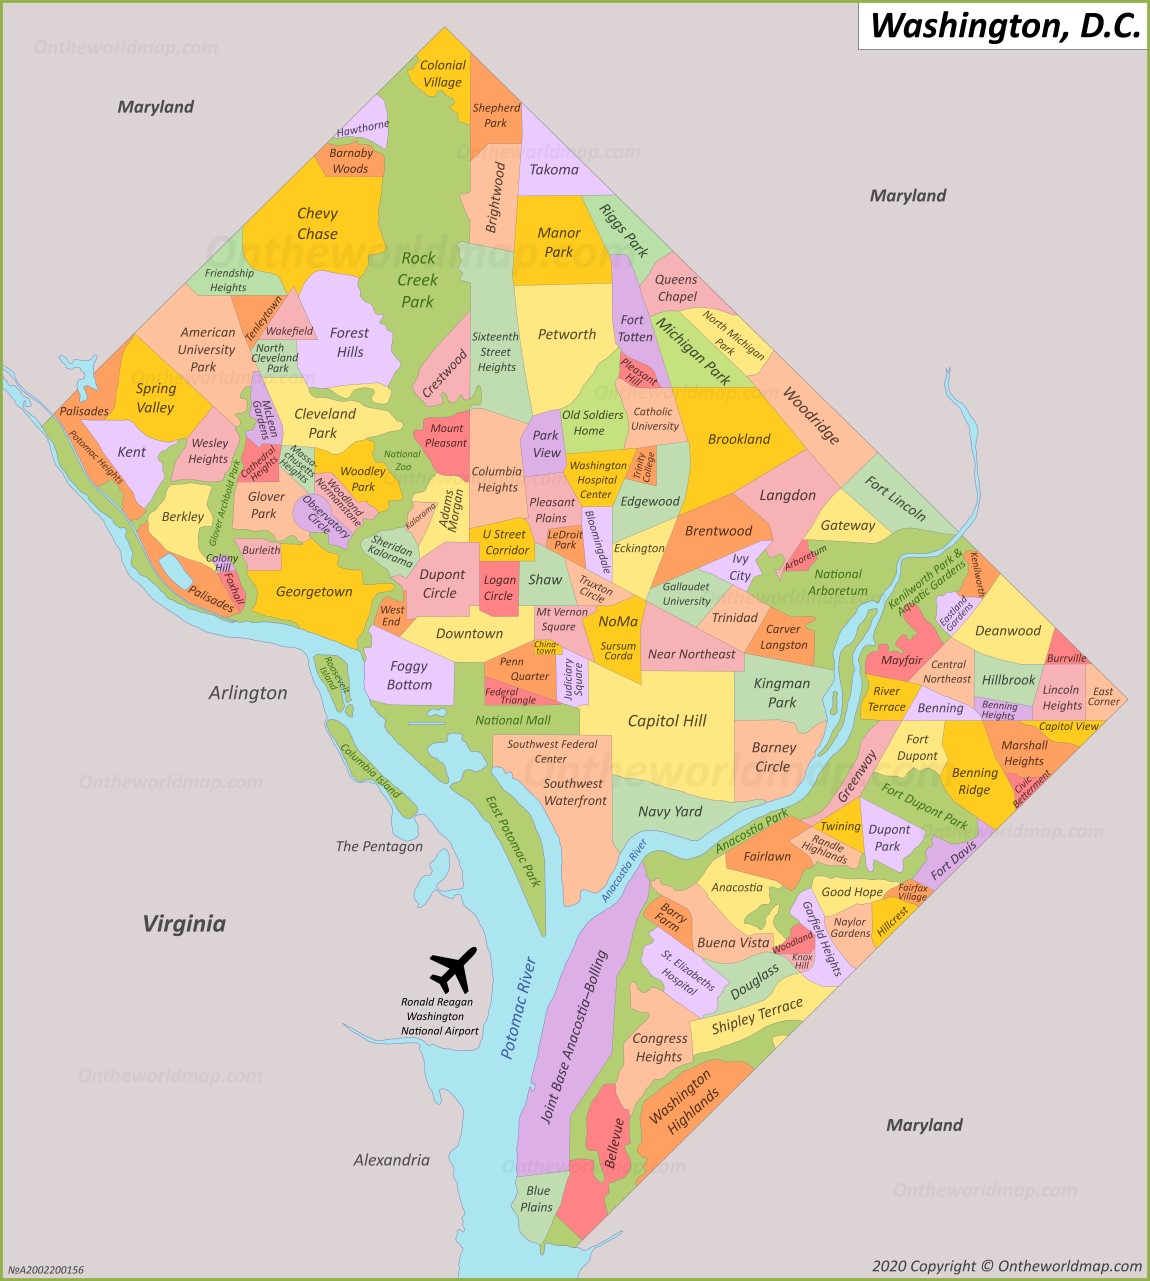 Washington, D.C. Maps | U.S. | Maps of Washington, District of Columbia